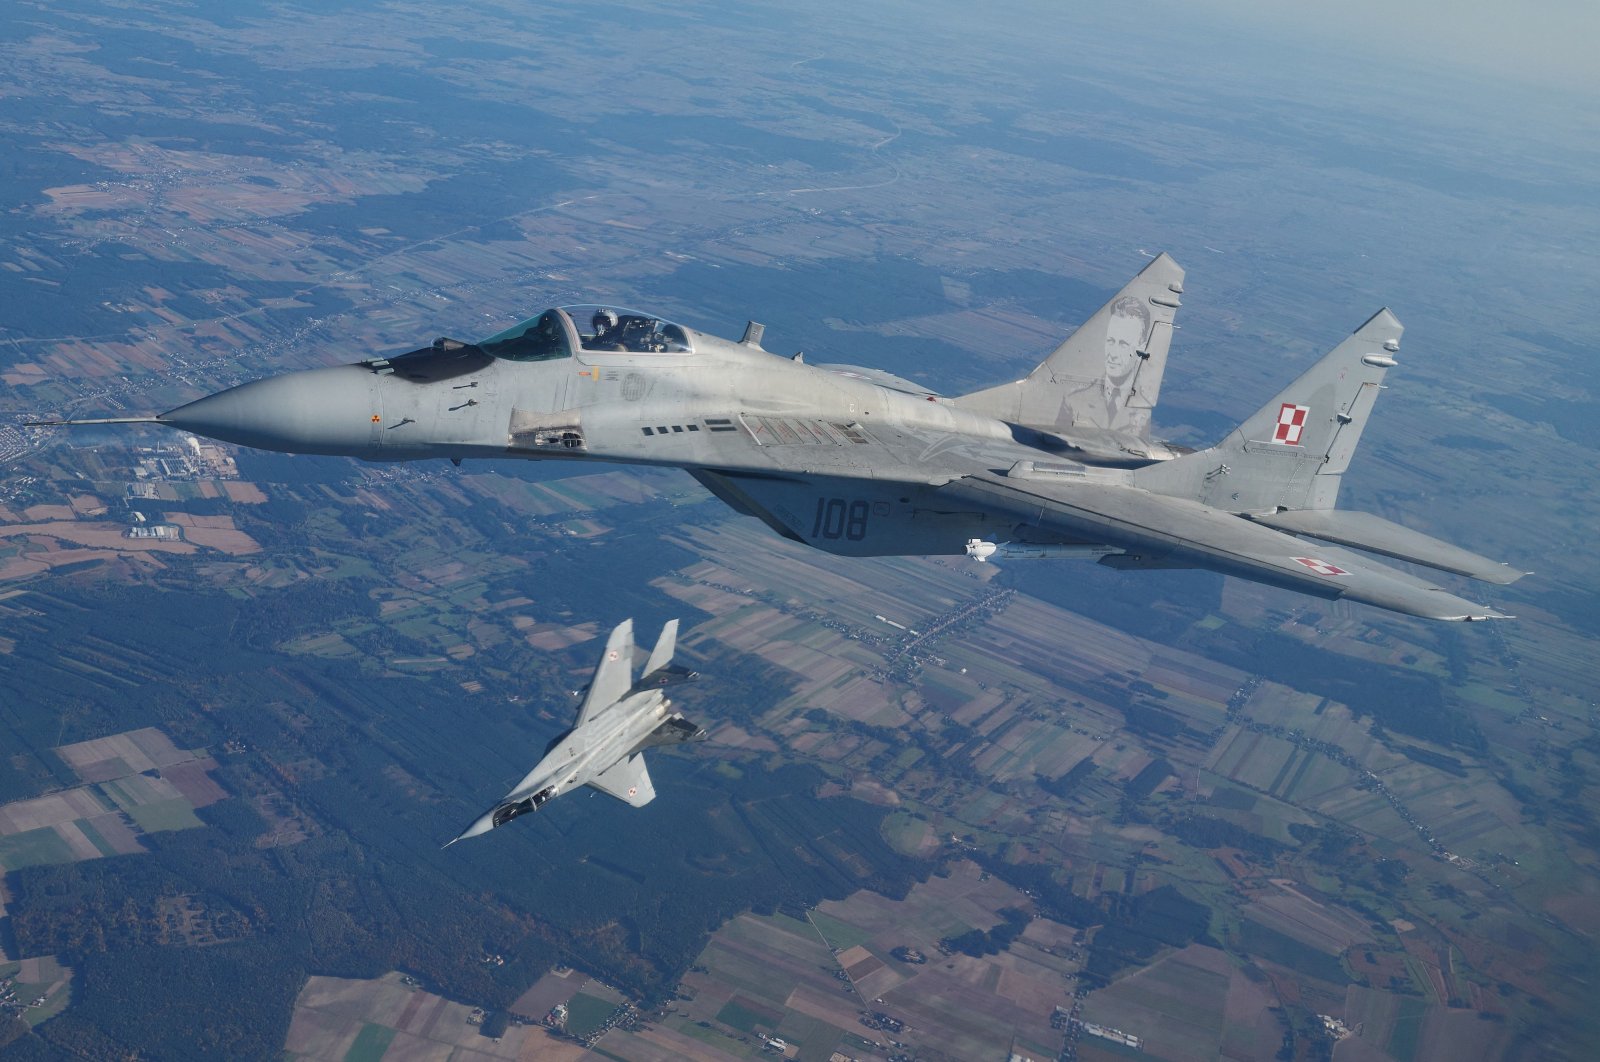 Jerman menyetujui permintaan Polandia untuk mengirim jet tempur ke Ukraina